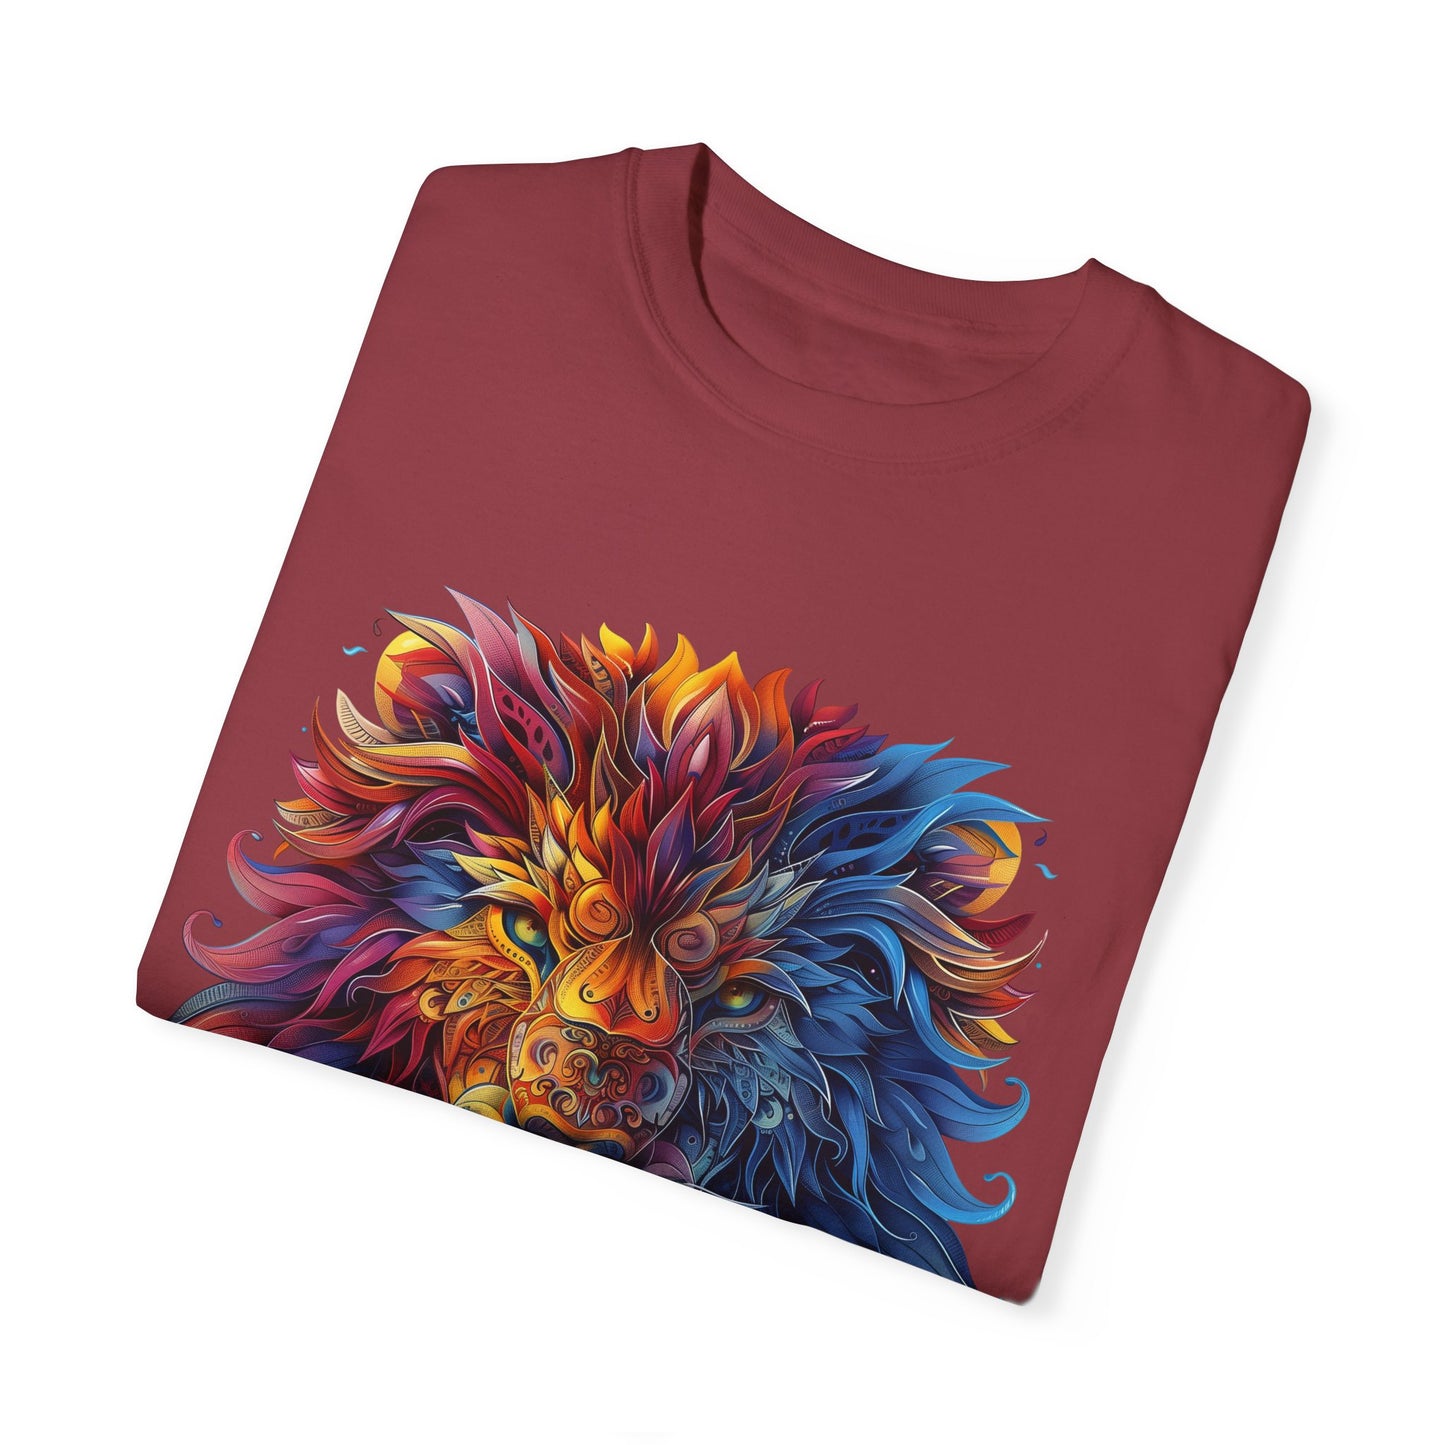 Lion Head Cool Graphic Design Novelty Unisex Garment-dyed T-shirt Cotton Funny Humorous Graphic Soft Premium Unisex Men Women Chili T-shirt Birthday Gift-35